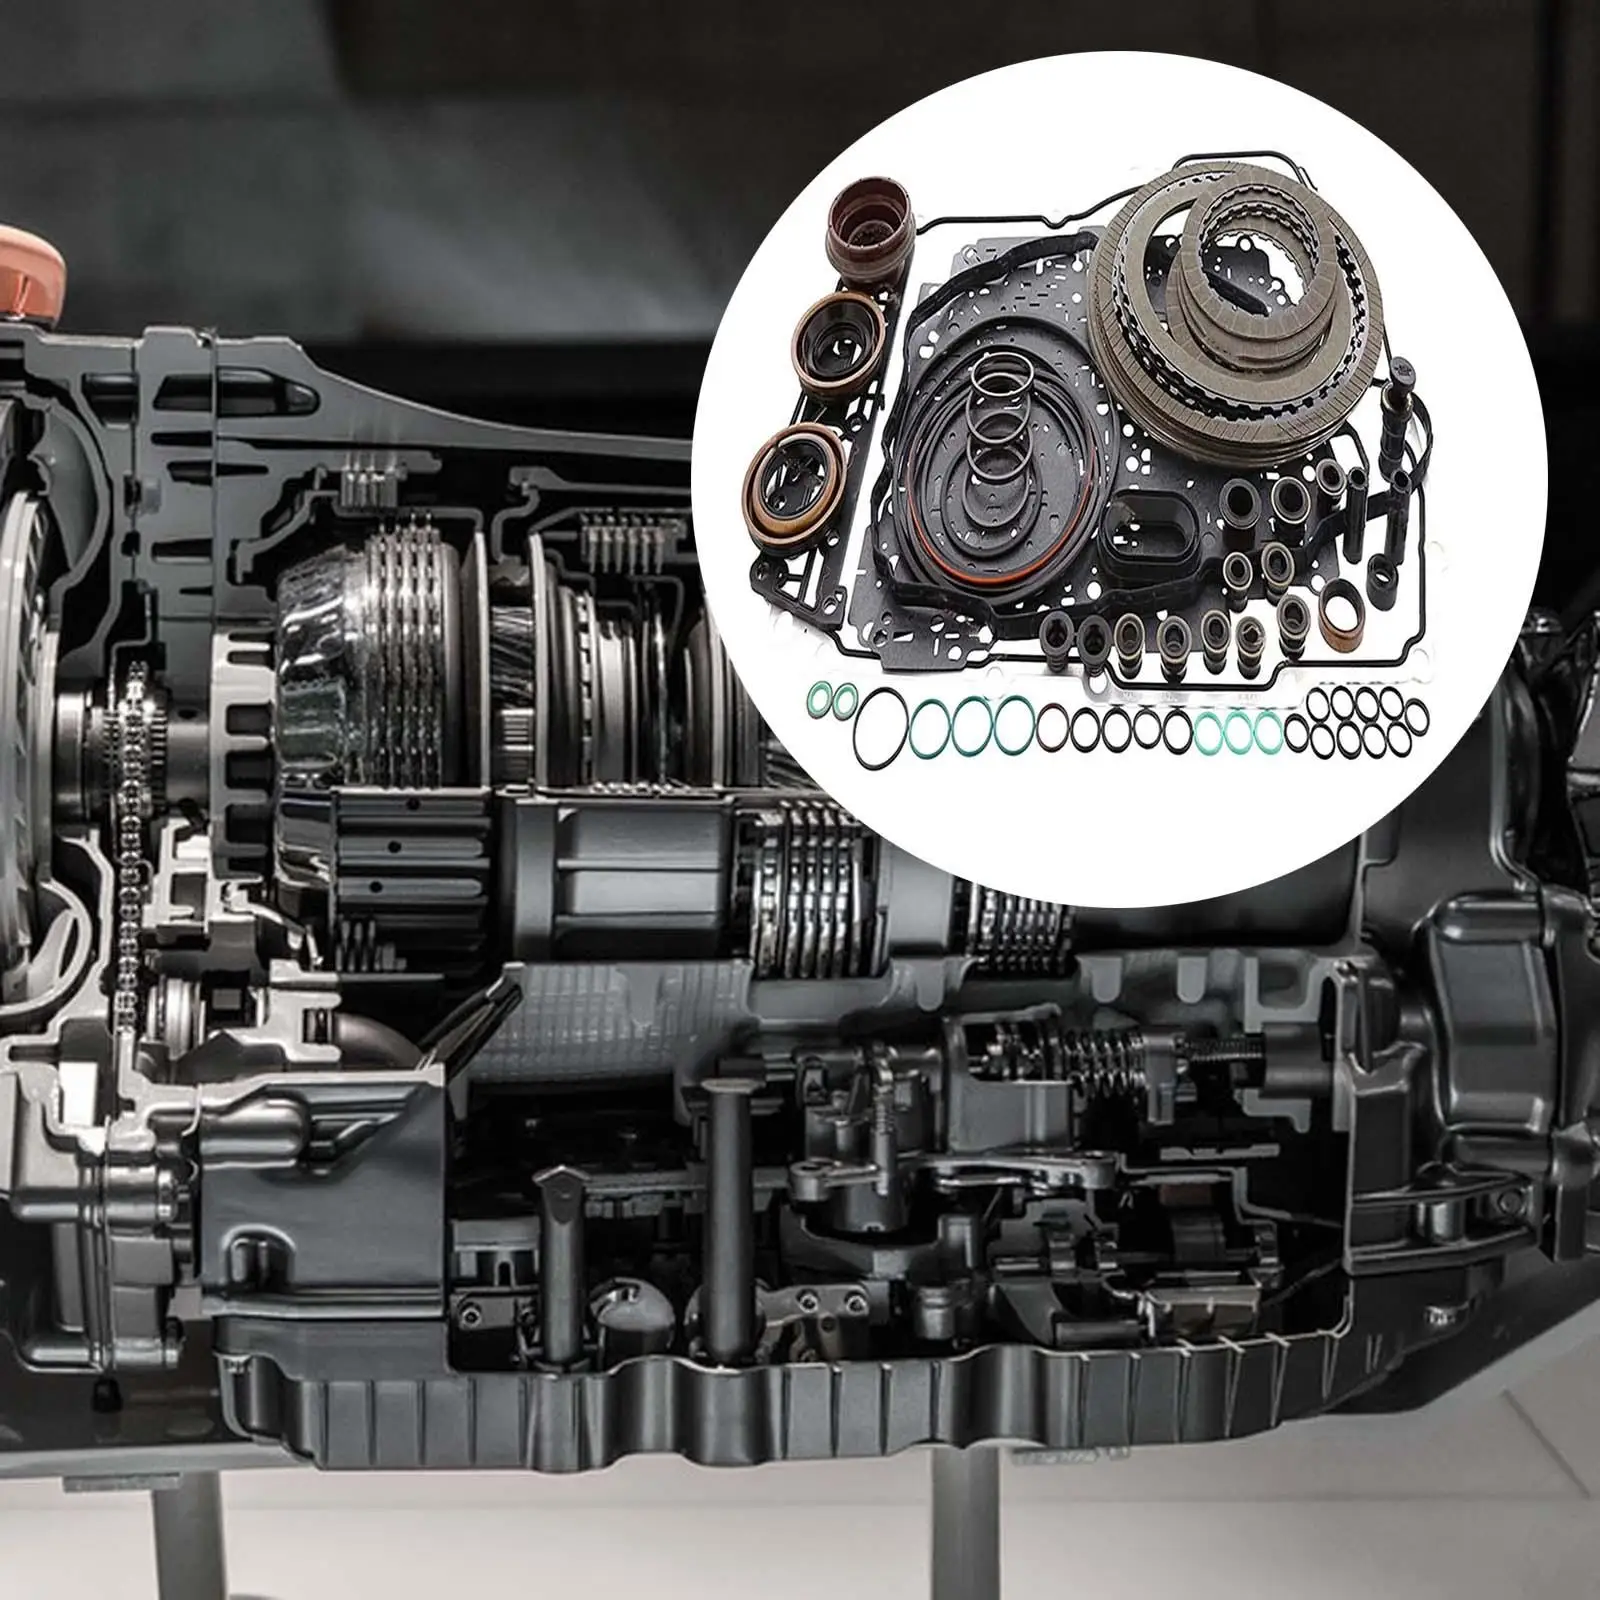 6 Speed 6T40E 6T45E 6T50E Autotransmission Master Overhault Rebuild Set for Buick